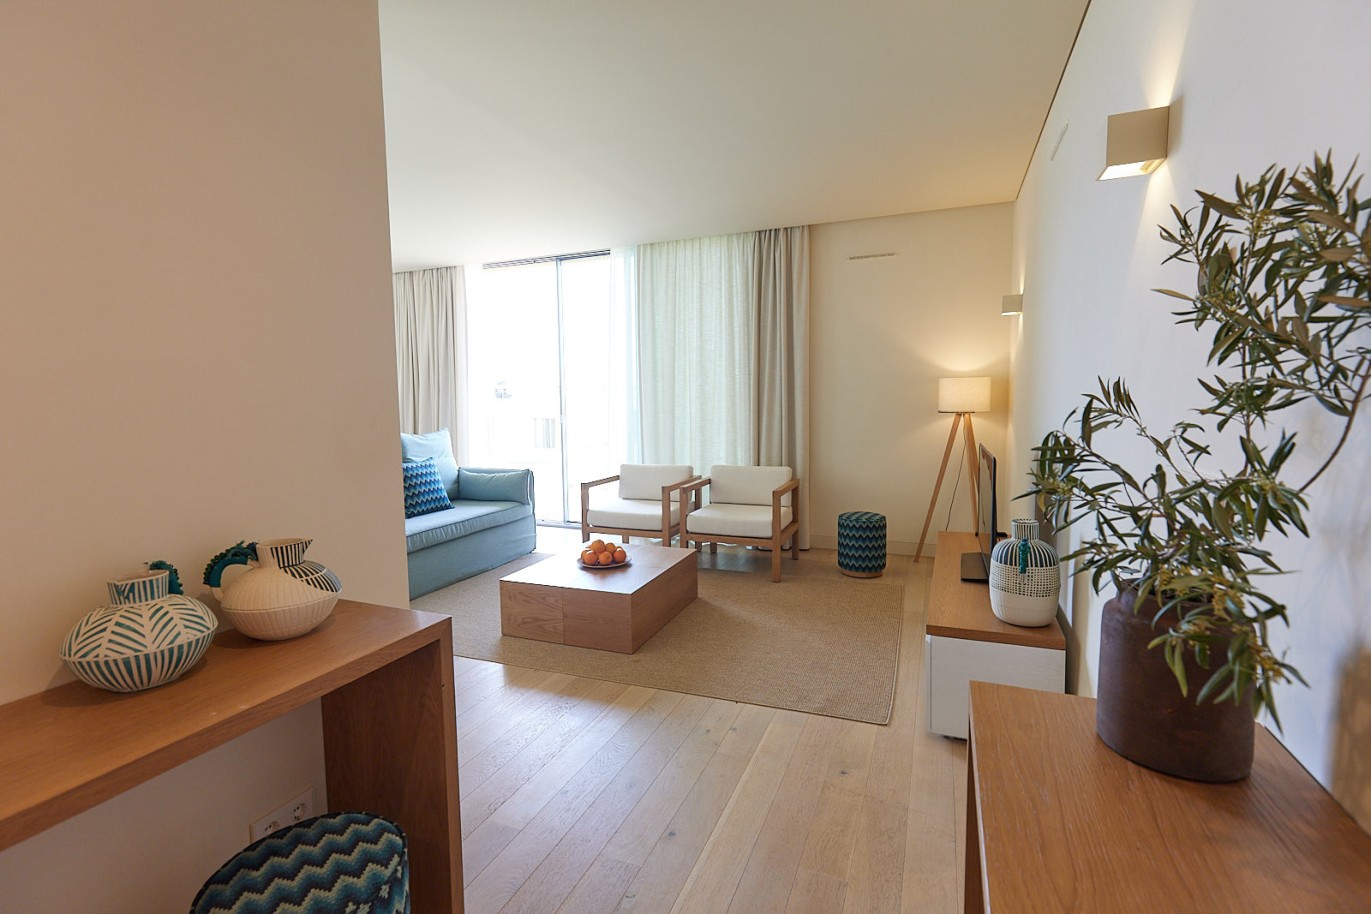 2 bedroom apartment in resort, for sale in Porches, Algarve_229230